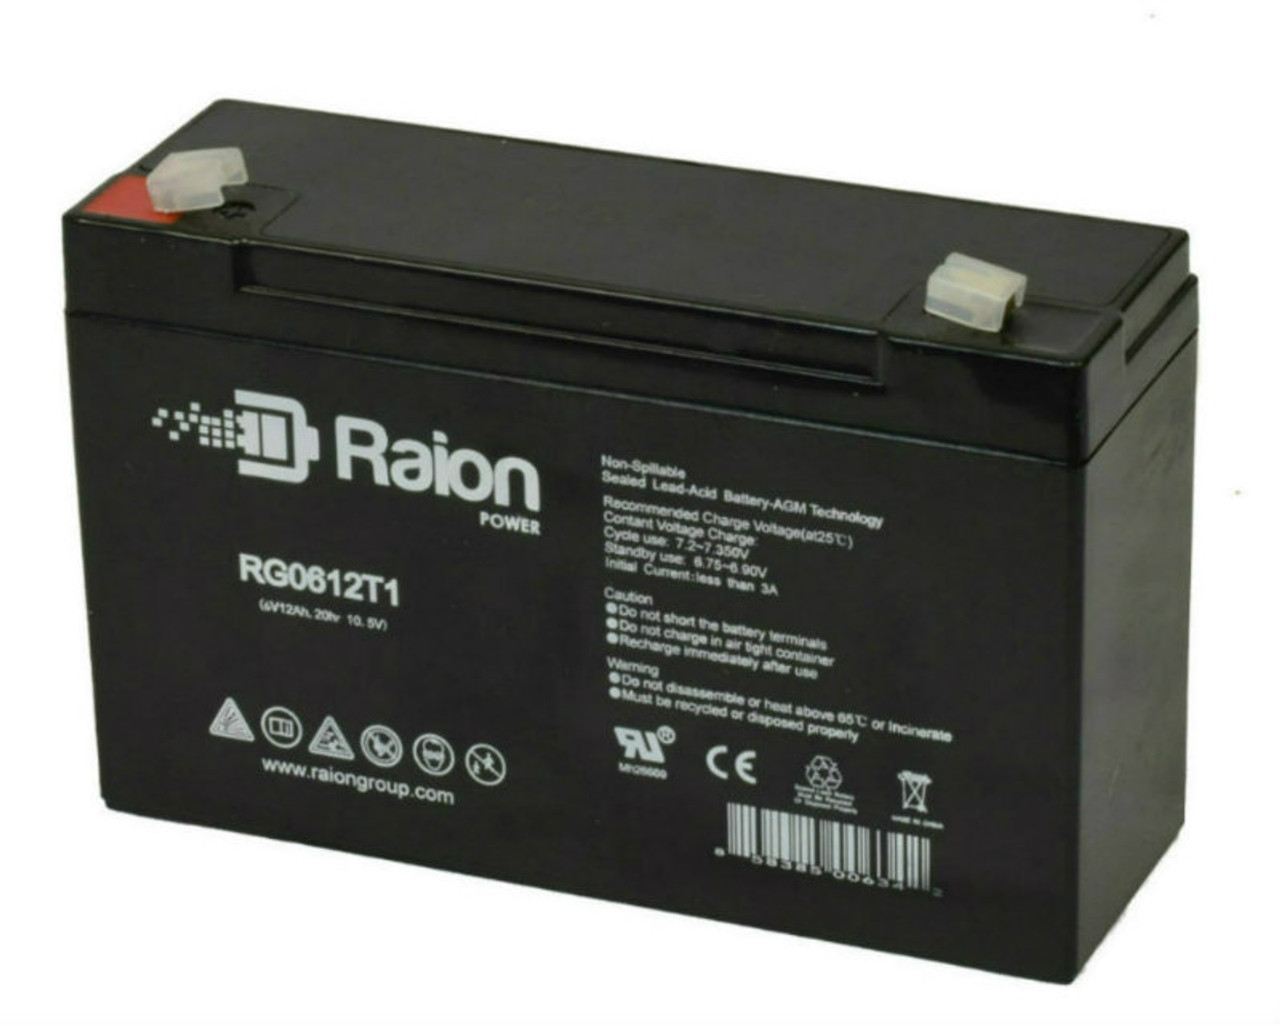 Raion Power RG06120T1 Replacement Battery for Yuasa NP10-6FR-F2